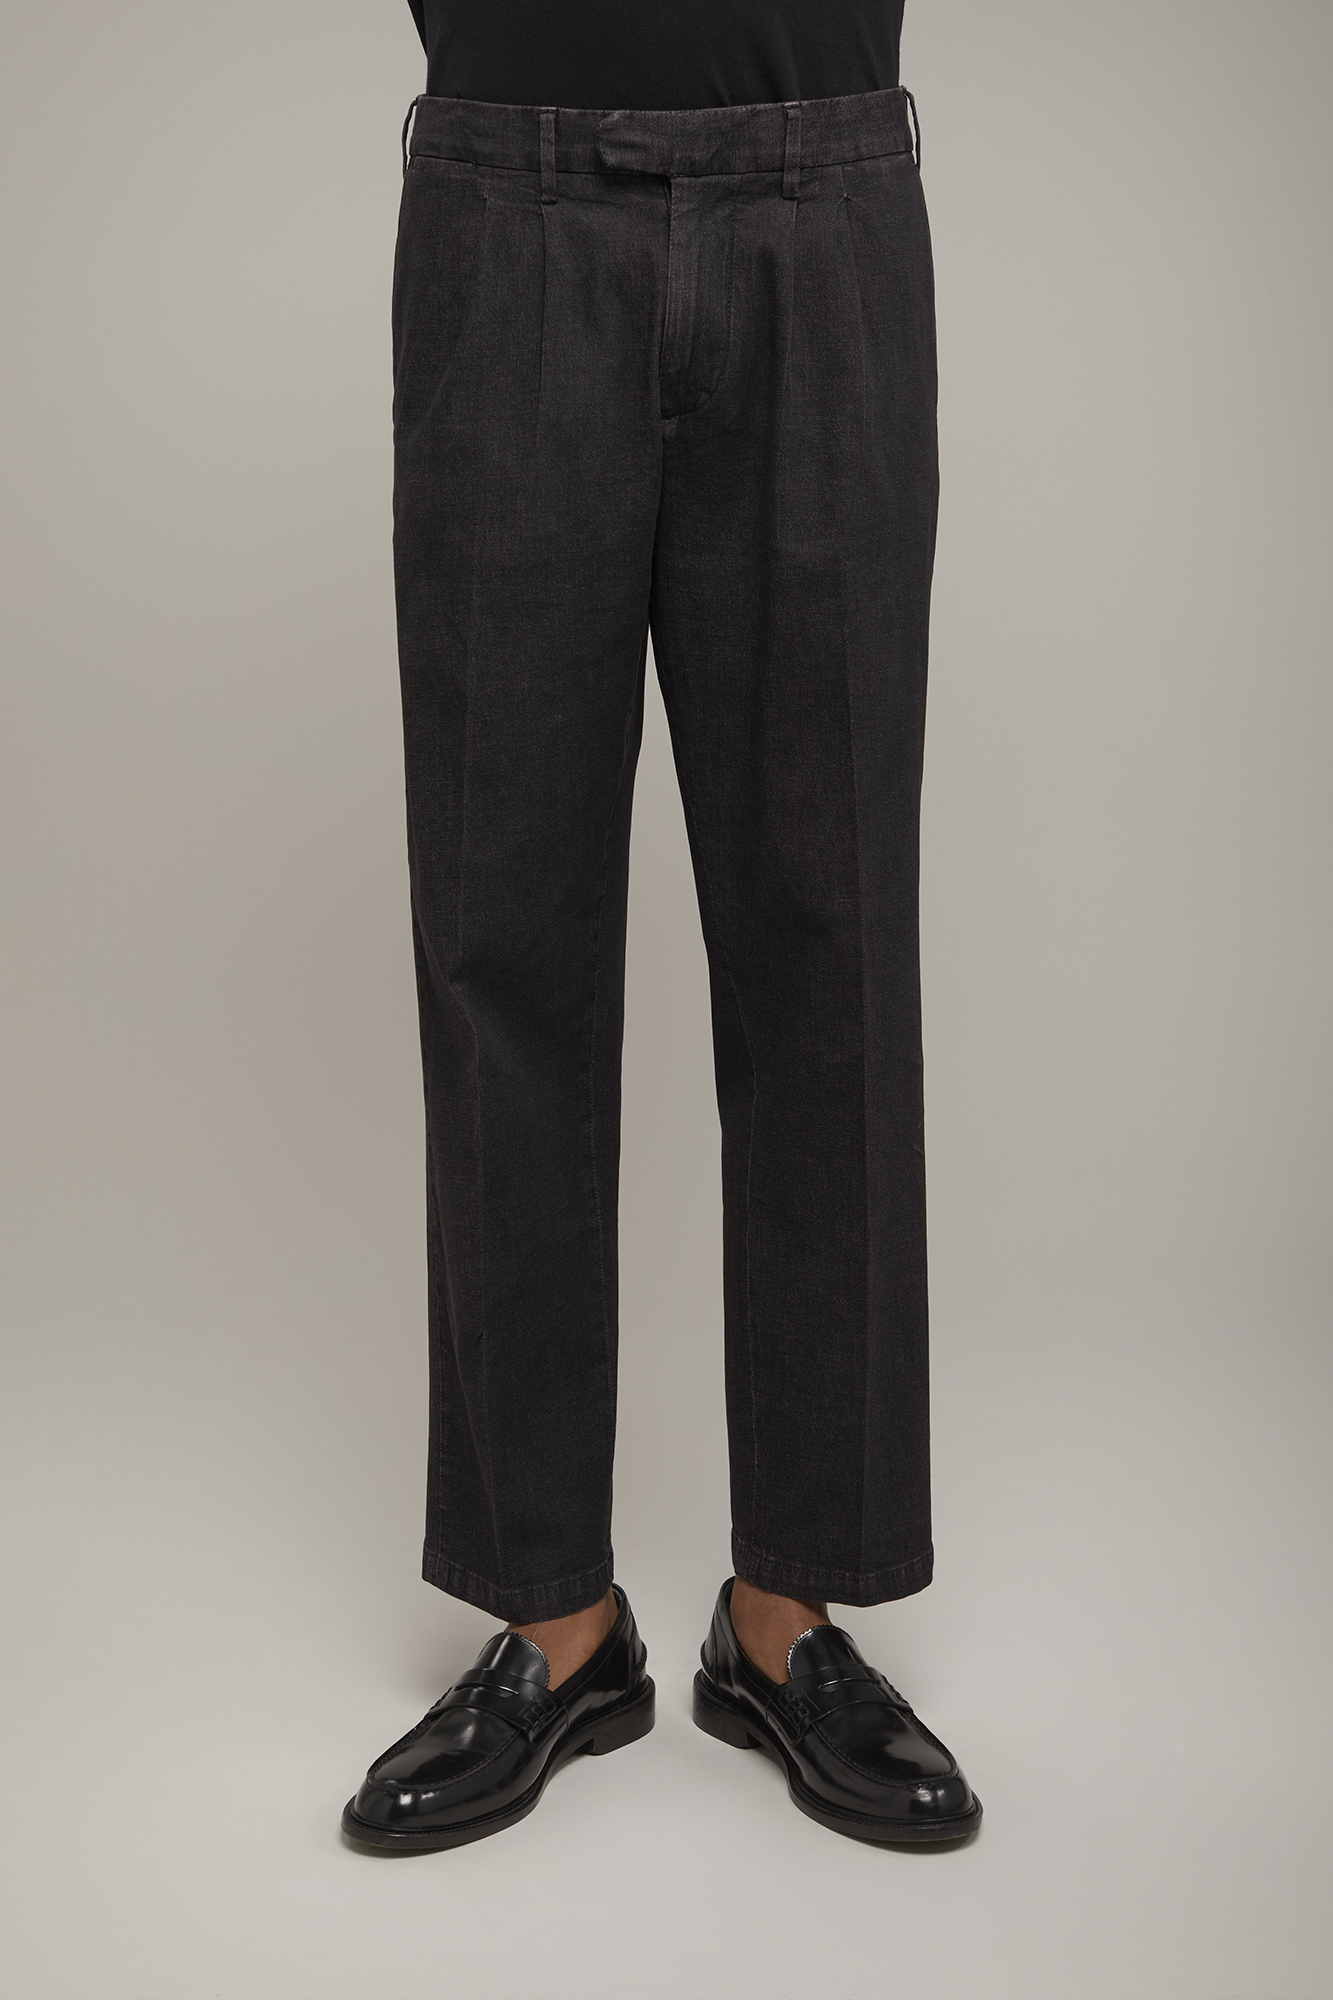 Pantalone tecnico uomo con doppia pinces tessuto denim leggero comfort fit image number null